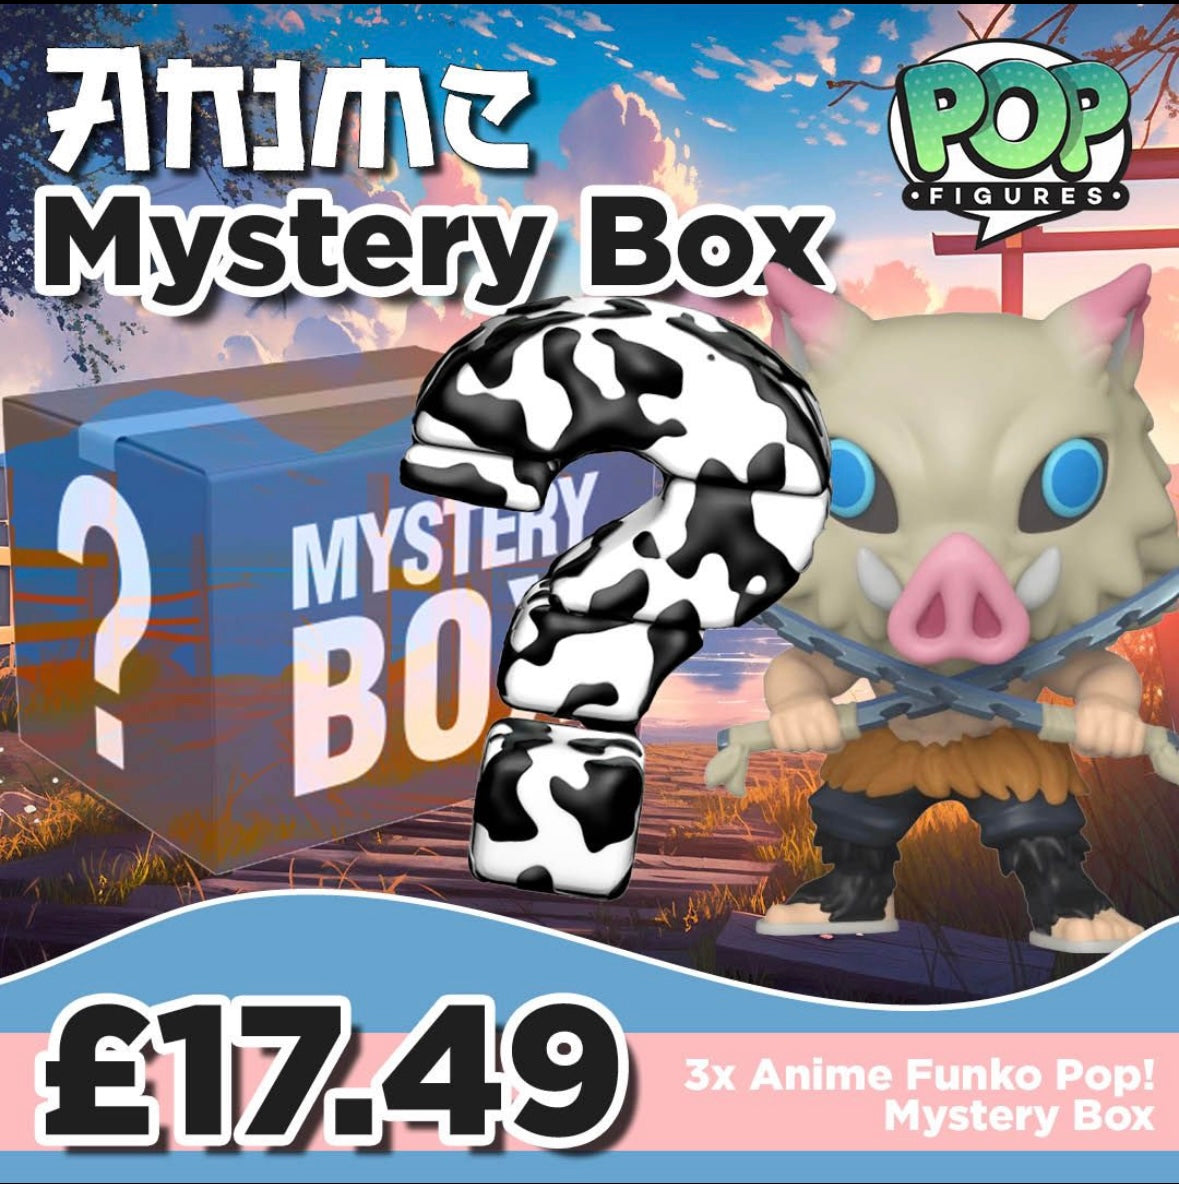 3 Anime Funko Pop Mystery Box!